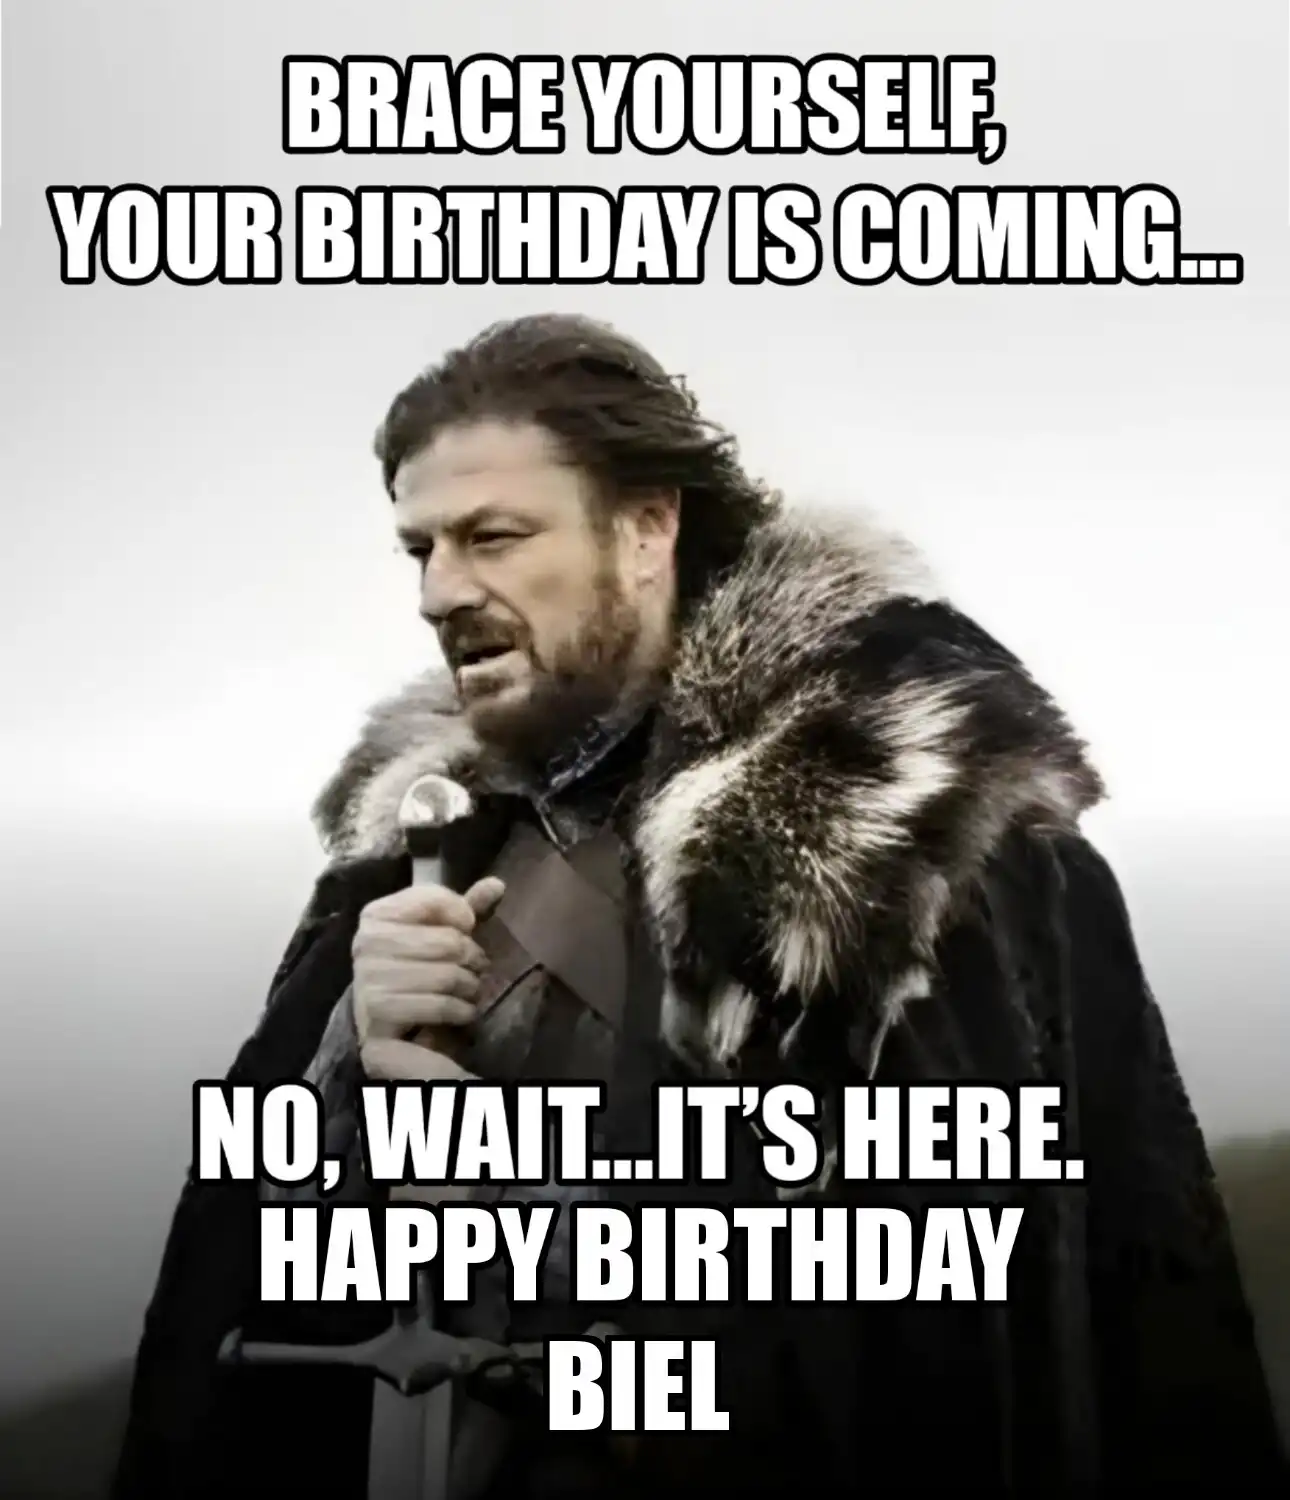 Happy Birthday Biel Brace Yourself Your Birthday Is Coming Meme